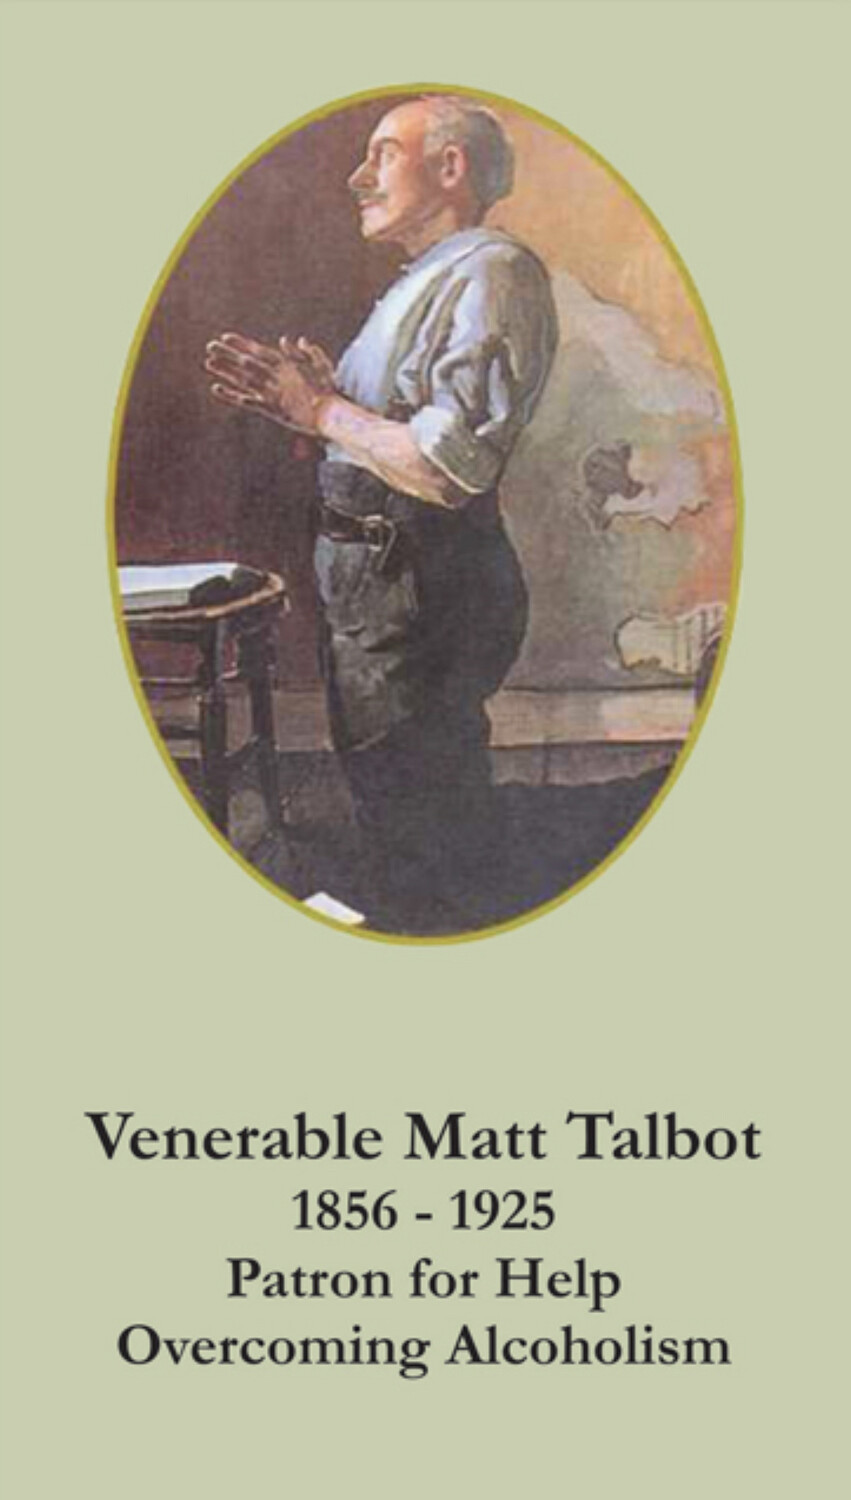 Venerable Matt Talbott prayer card 224